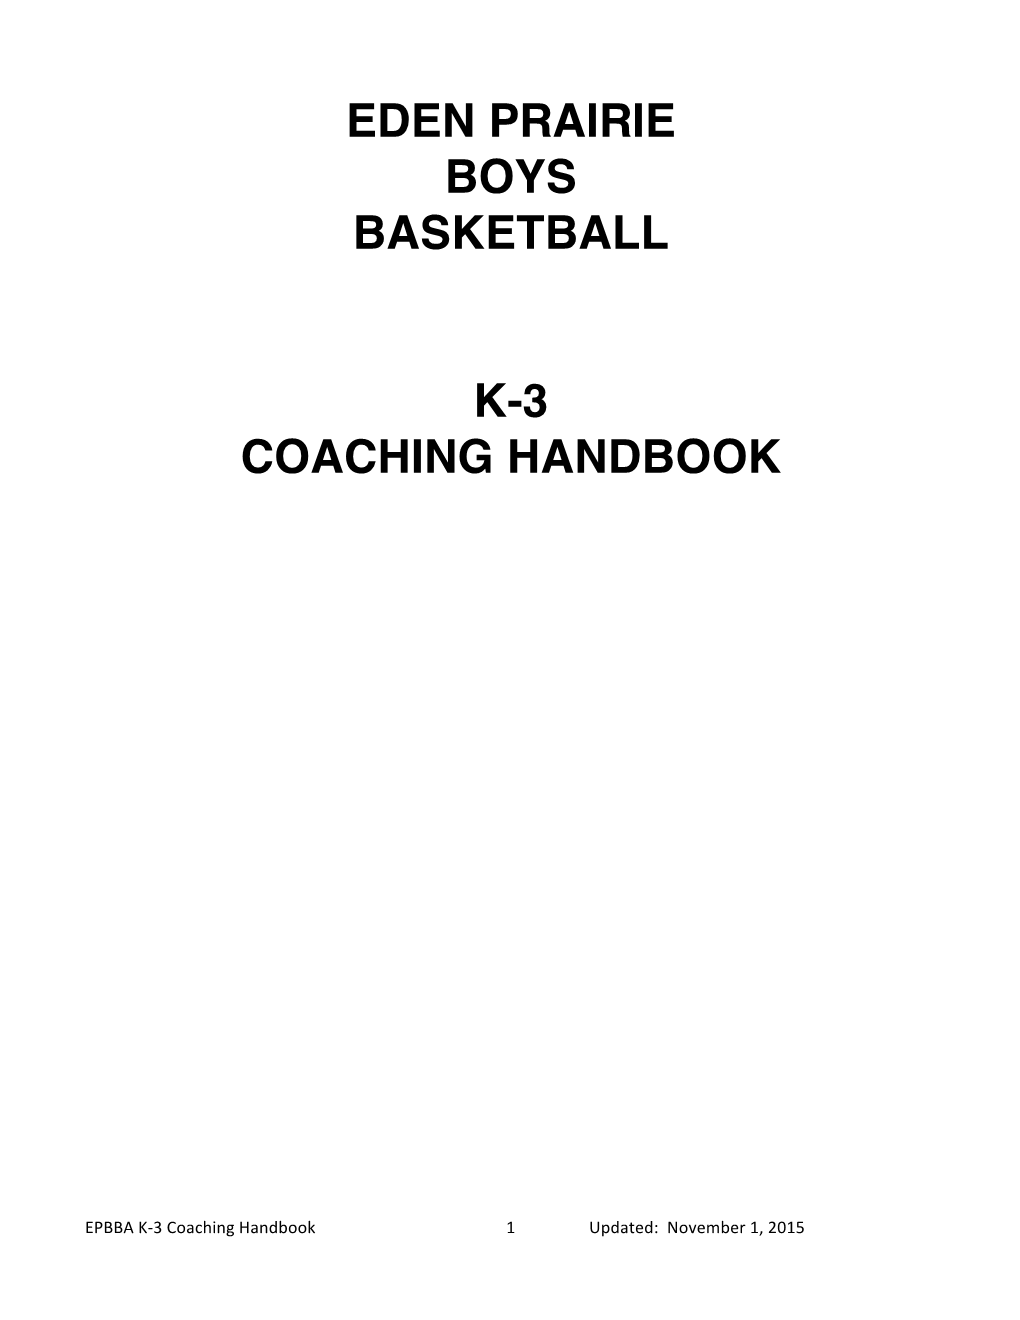 Eden Prairie Boys Basketball K-3 Coaching Handbook